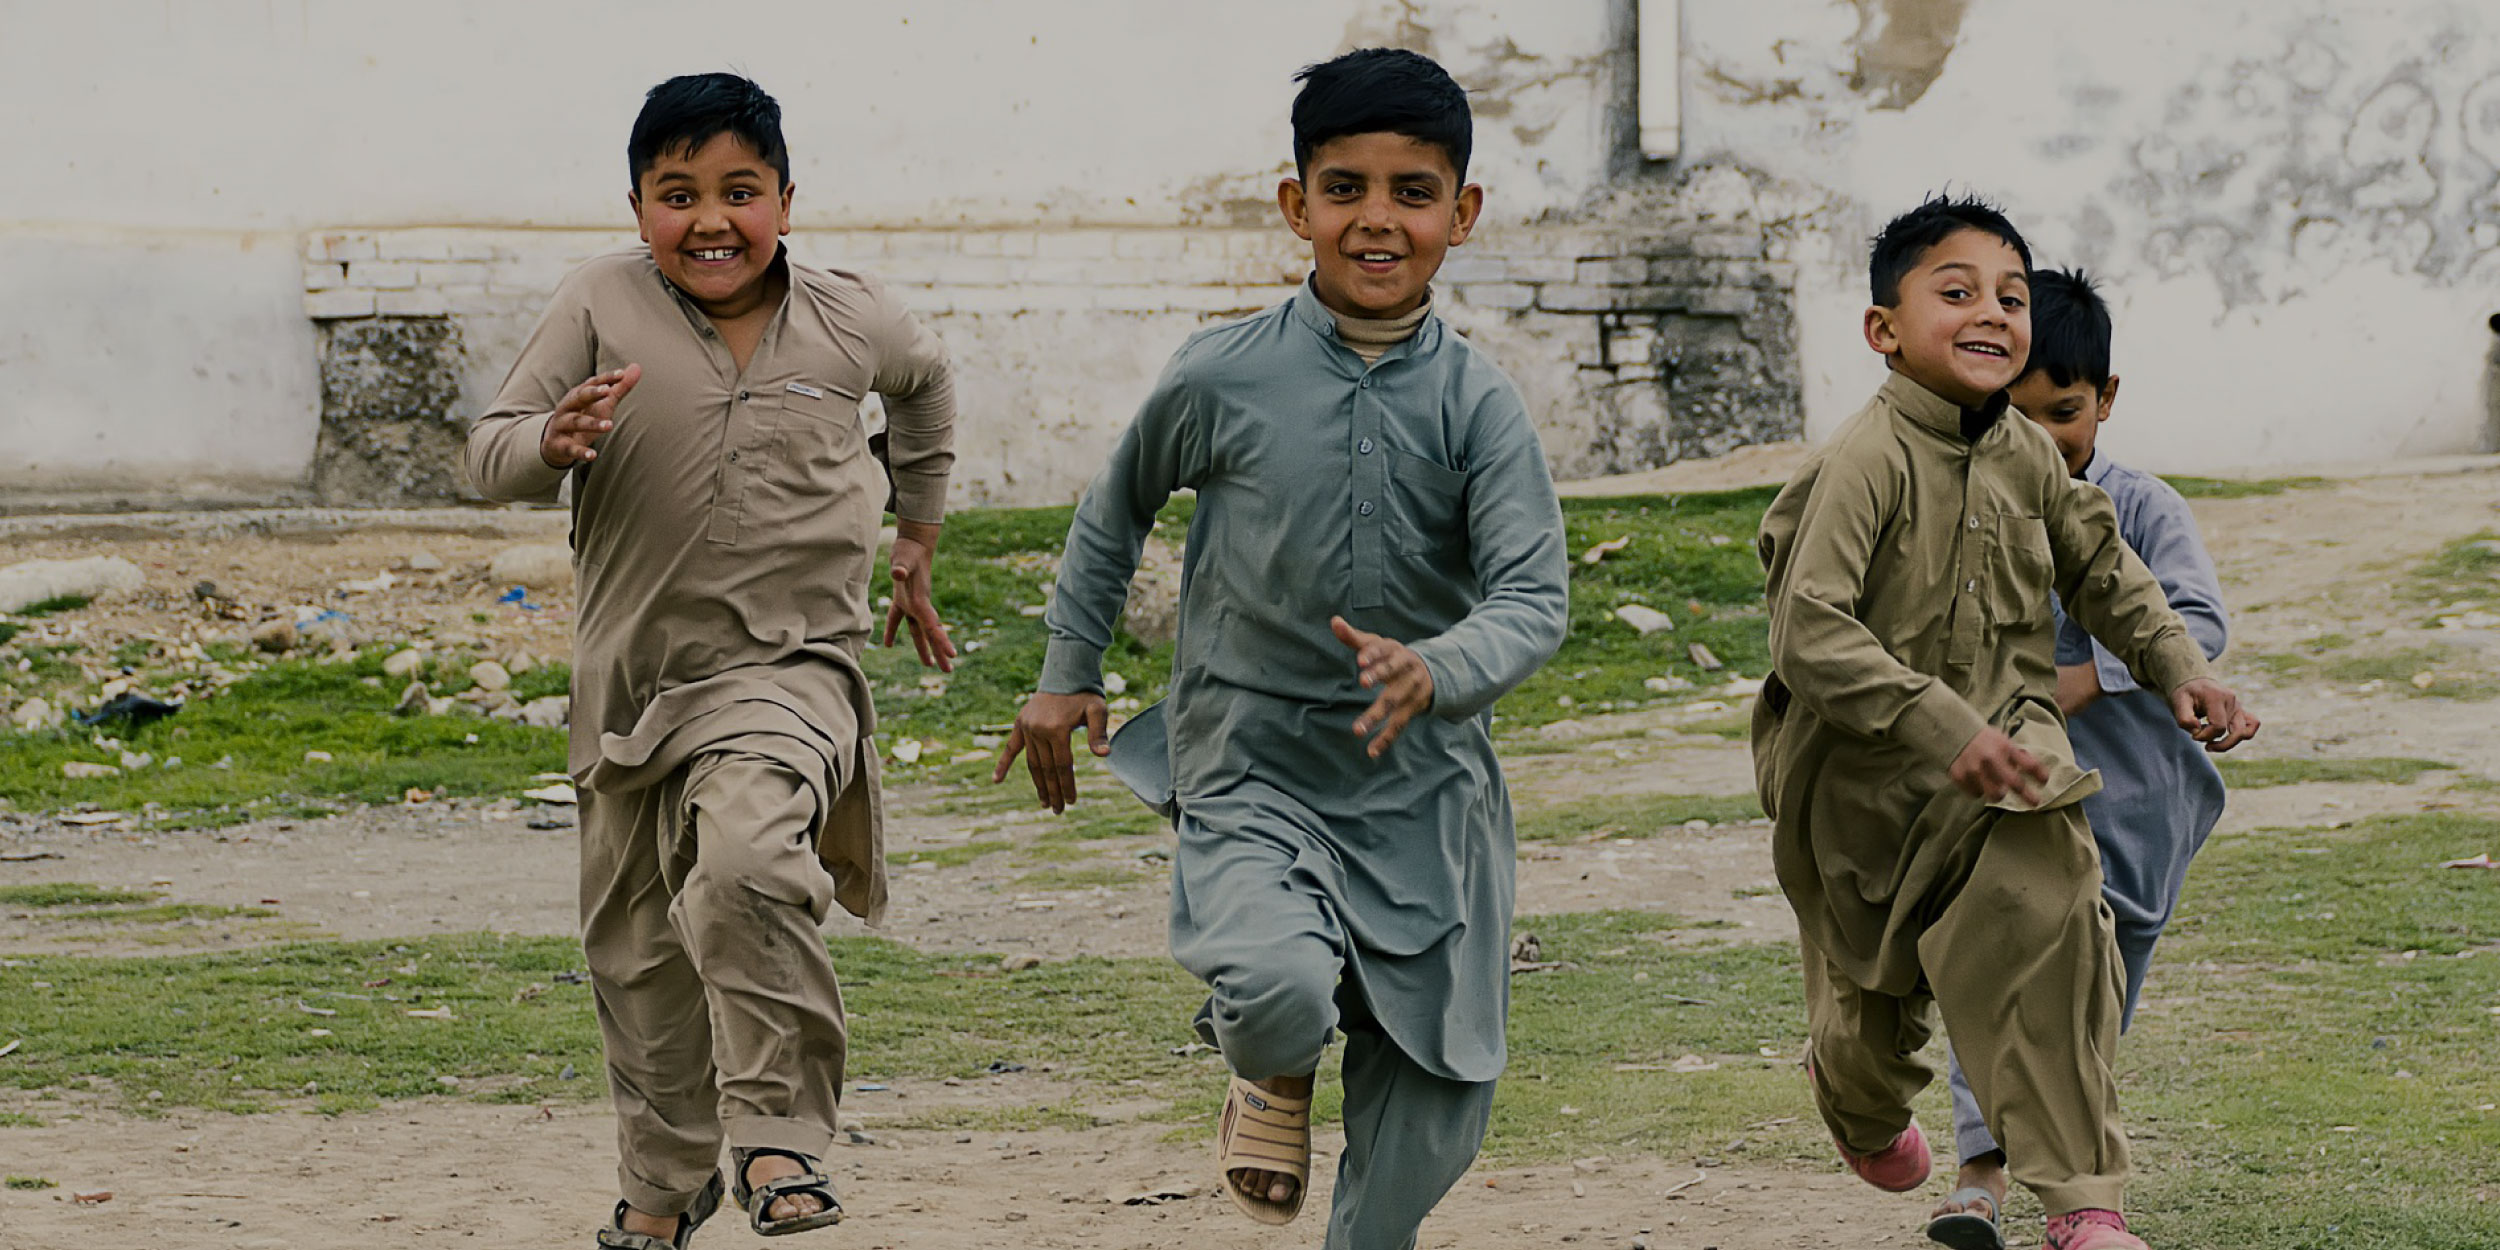 Three Pakistani boys running in traditional clothing